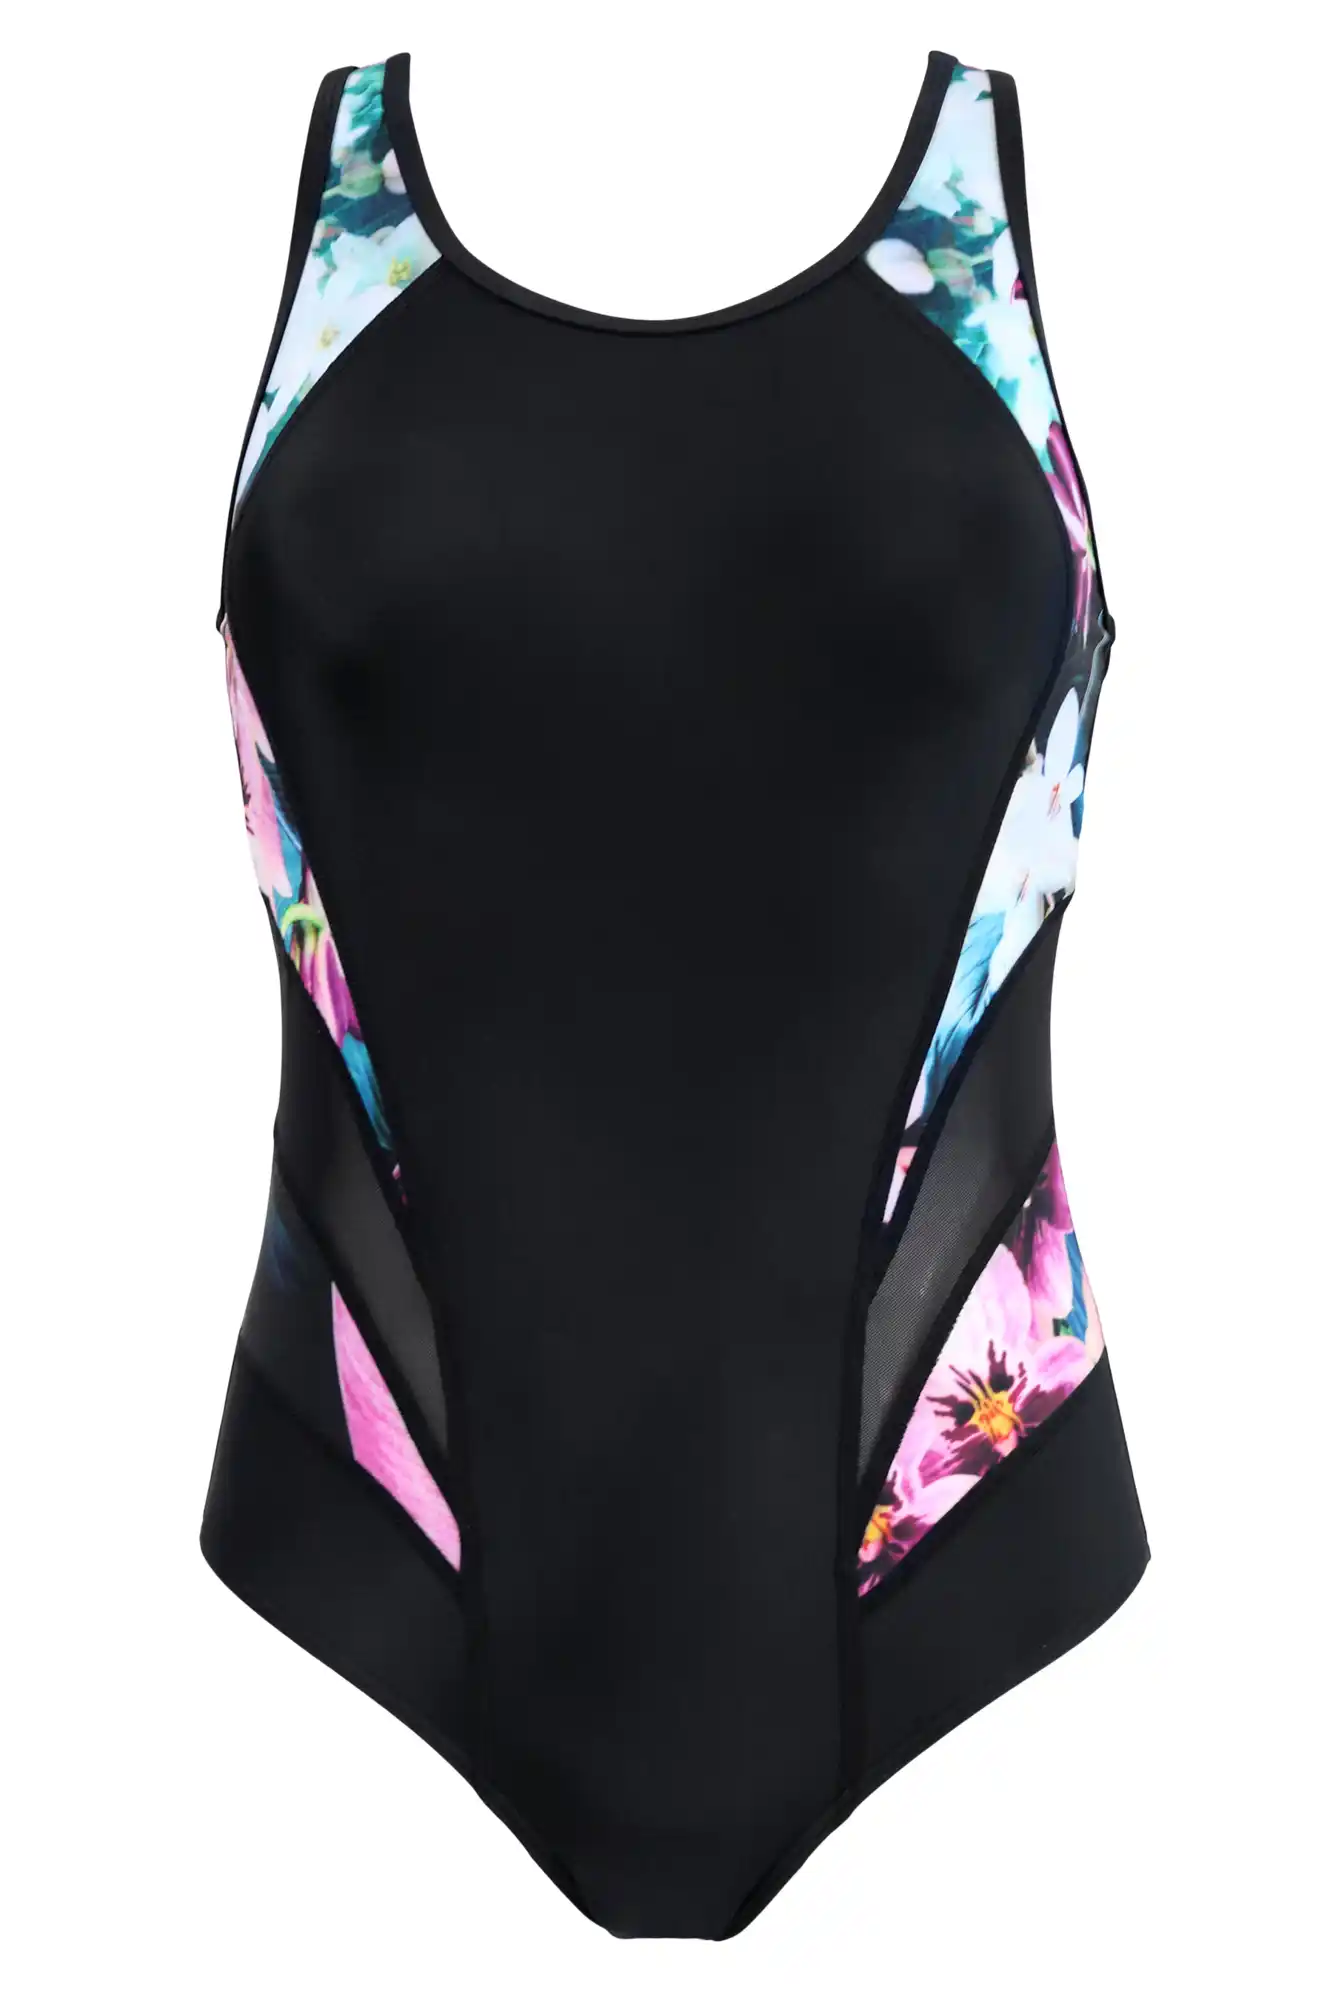 Pour Moi Energy Short Sleeved Zip Front Paddle Swimsuit - Belle Lingerie